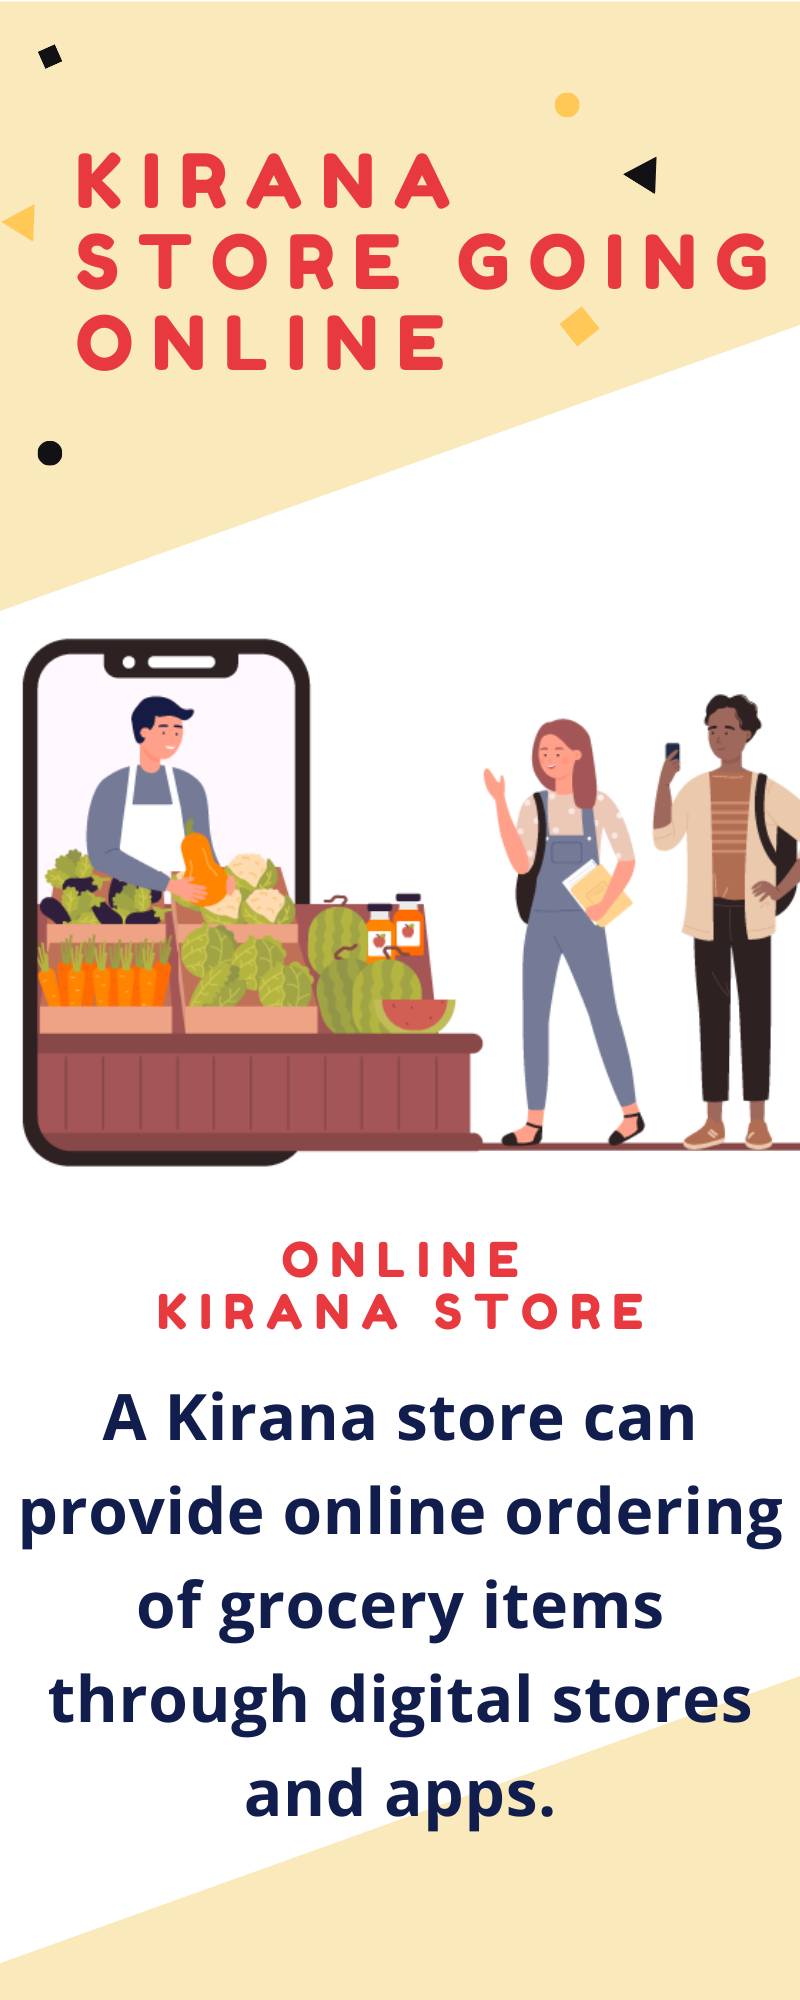 online kirana store app